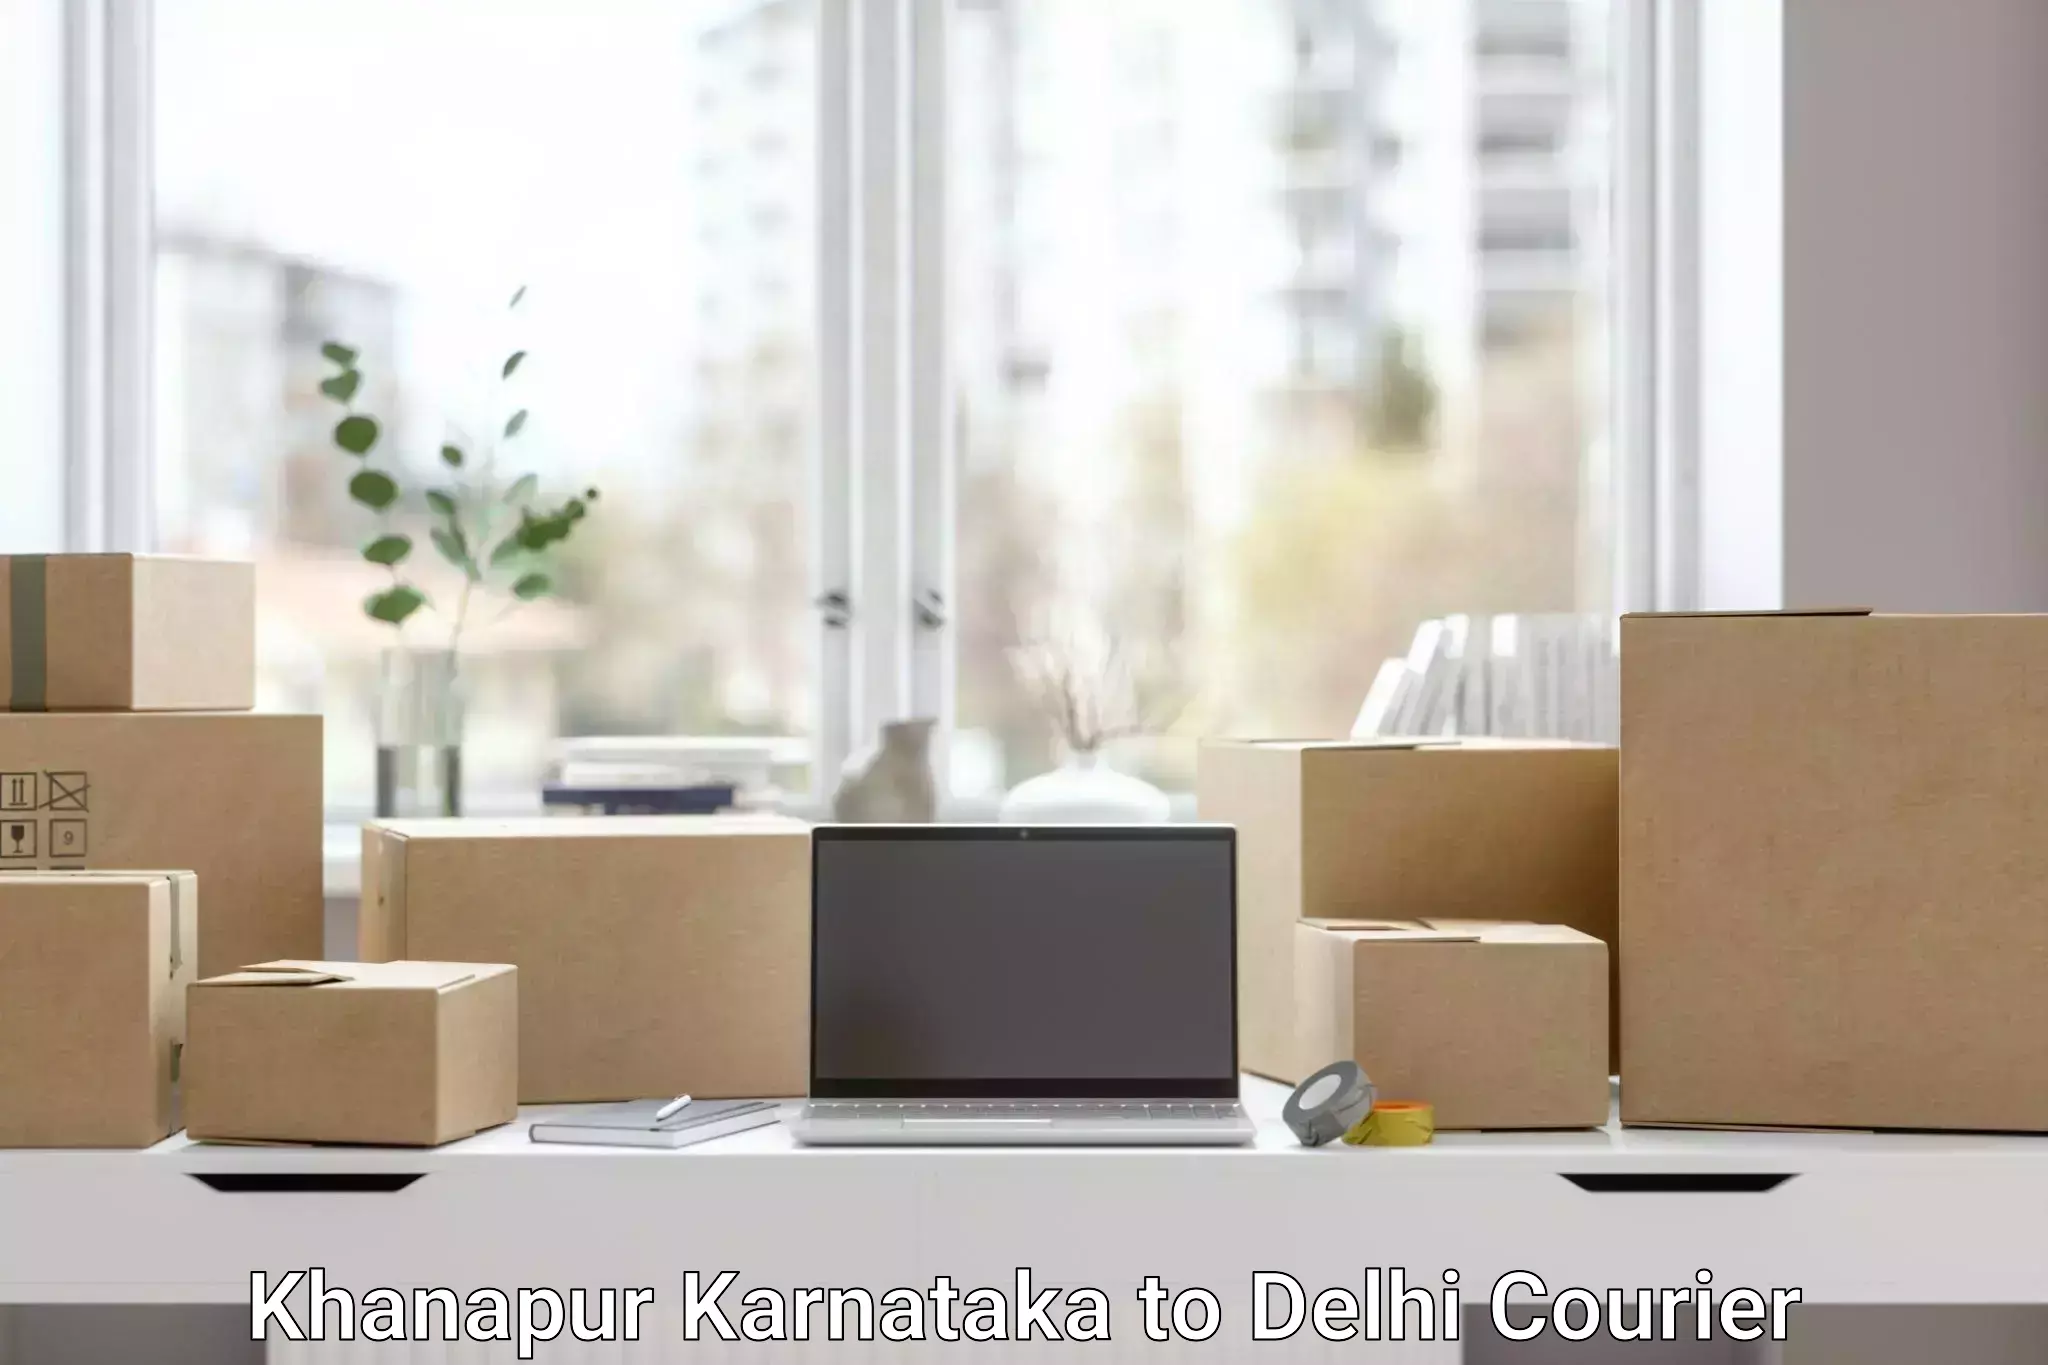 Affordable shipping solutions Khanapur Karnataka to NCR